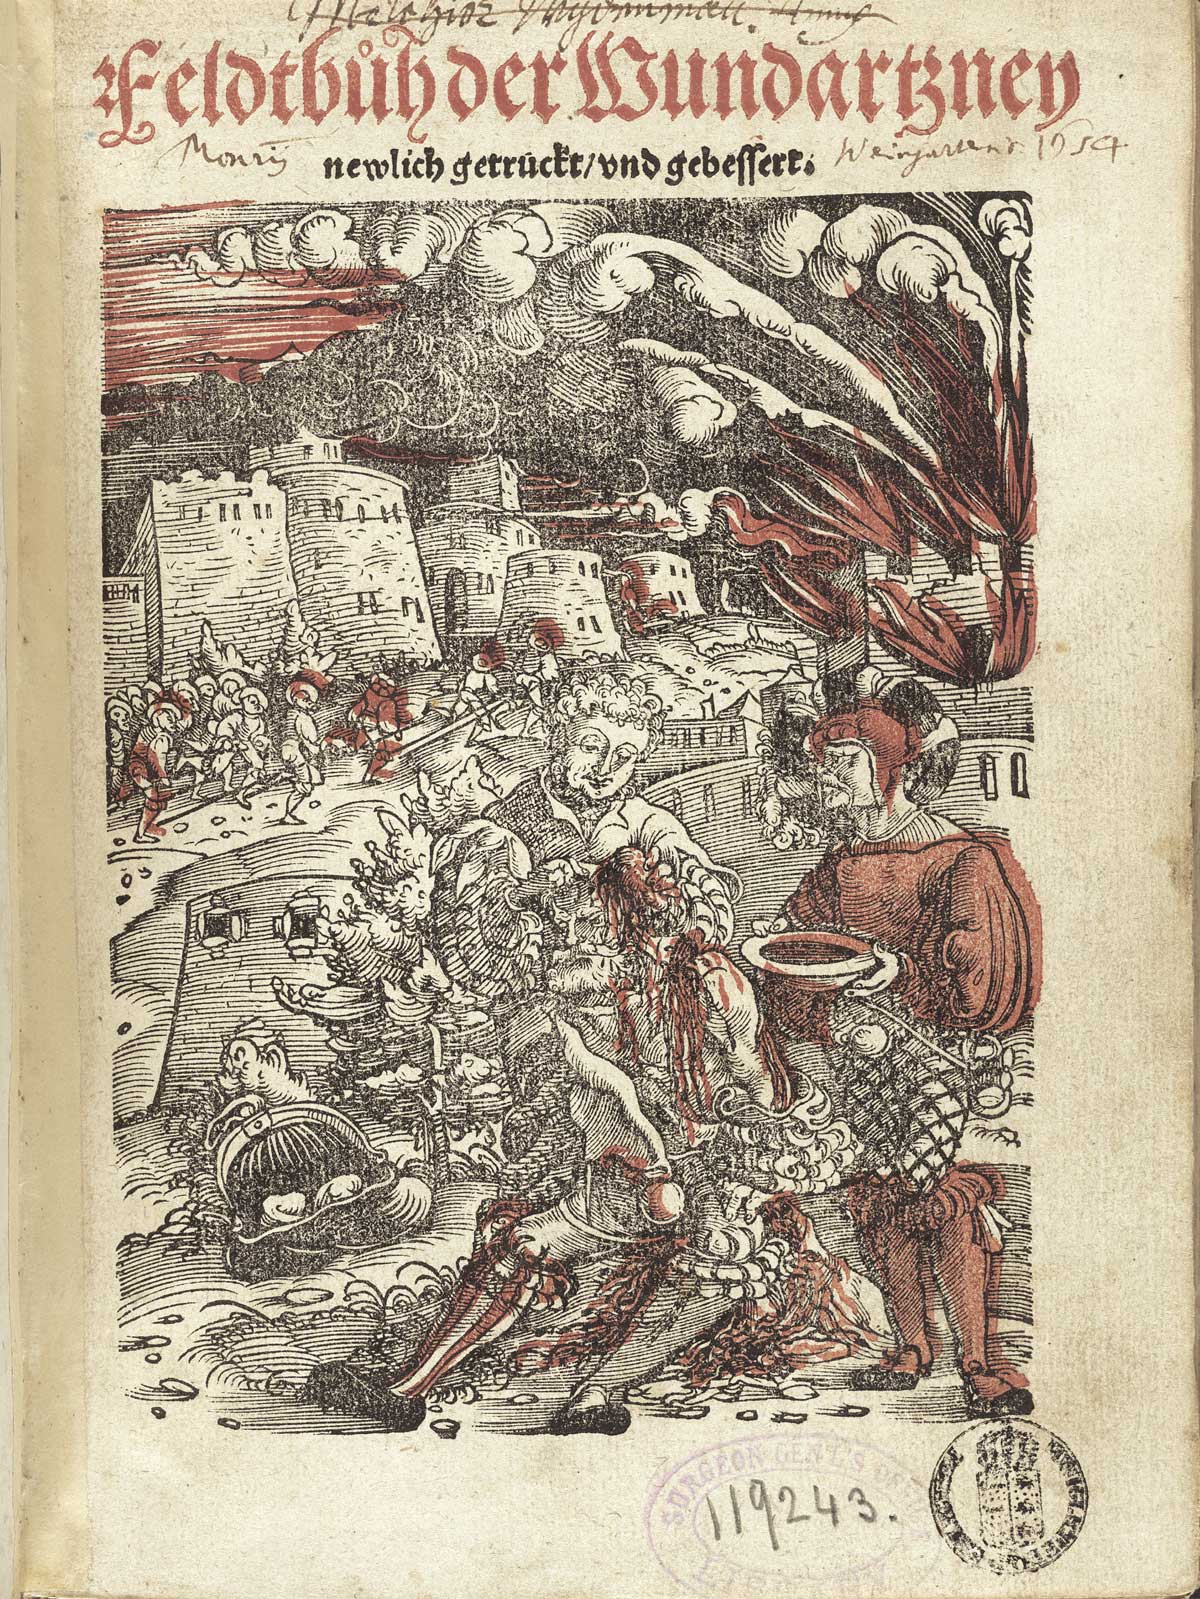 The titlepage of Hans von Gersdorff's Feldtbuch der Wundartzney: newlich getruckt und gebessert, featuring a large woodcut title vignette colored with red of surgeons attending to wounded man.